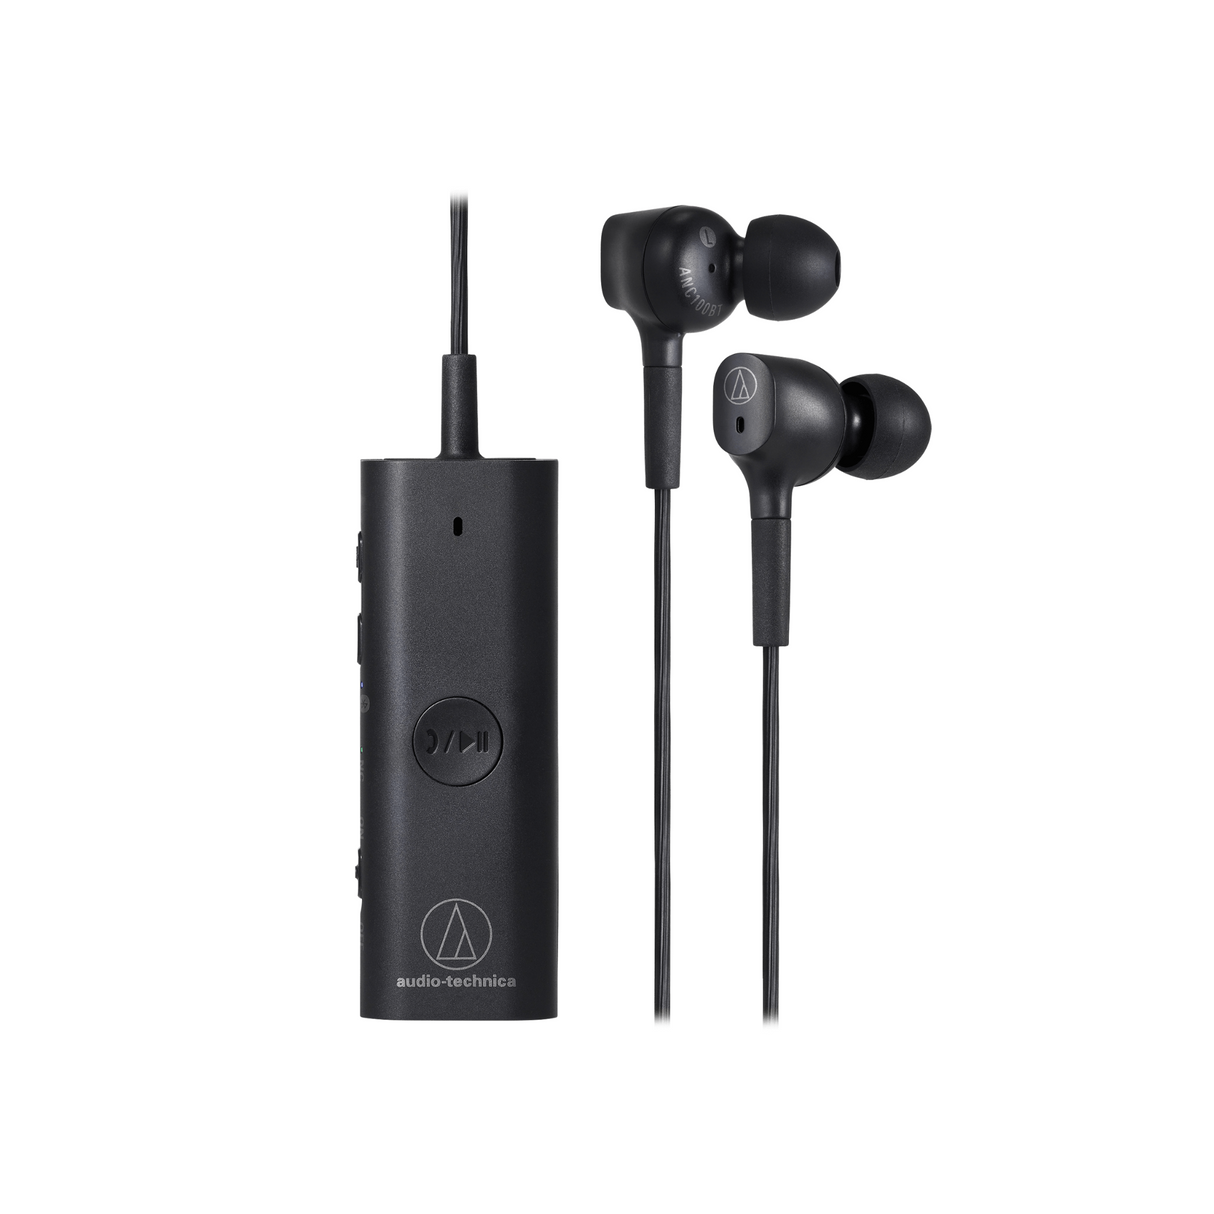 Audio Technica ATH-ANC100BT Wireless Noise Cancelling Earphones